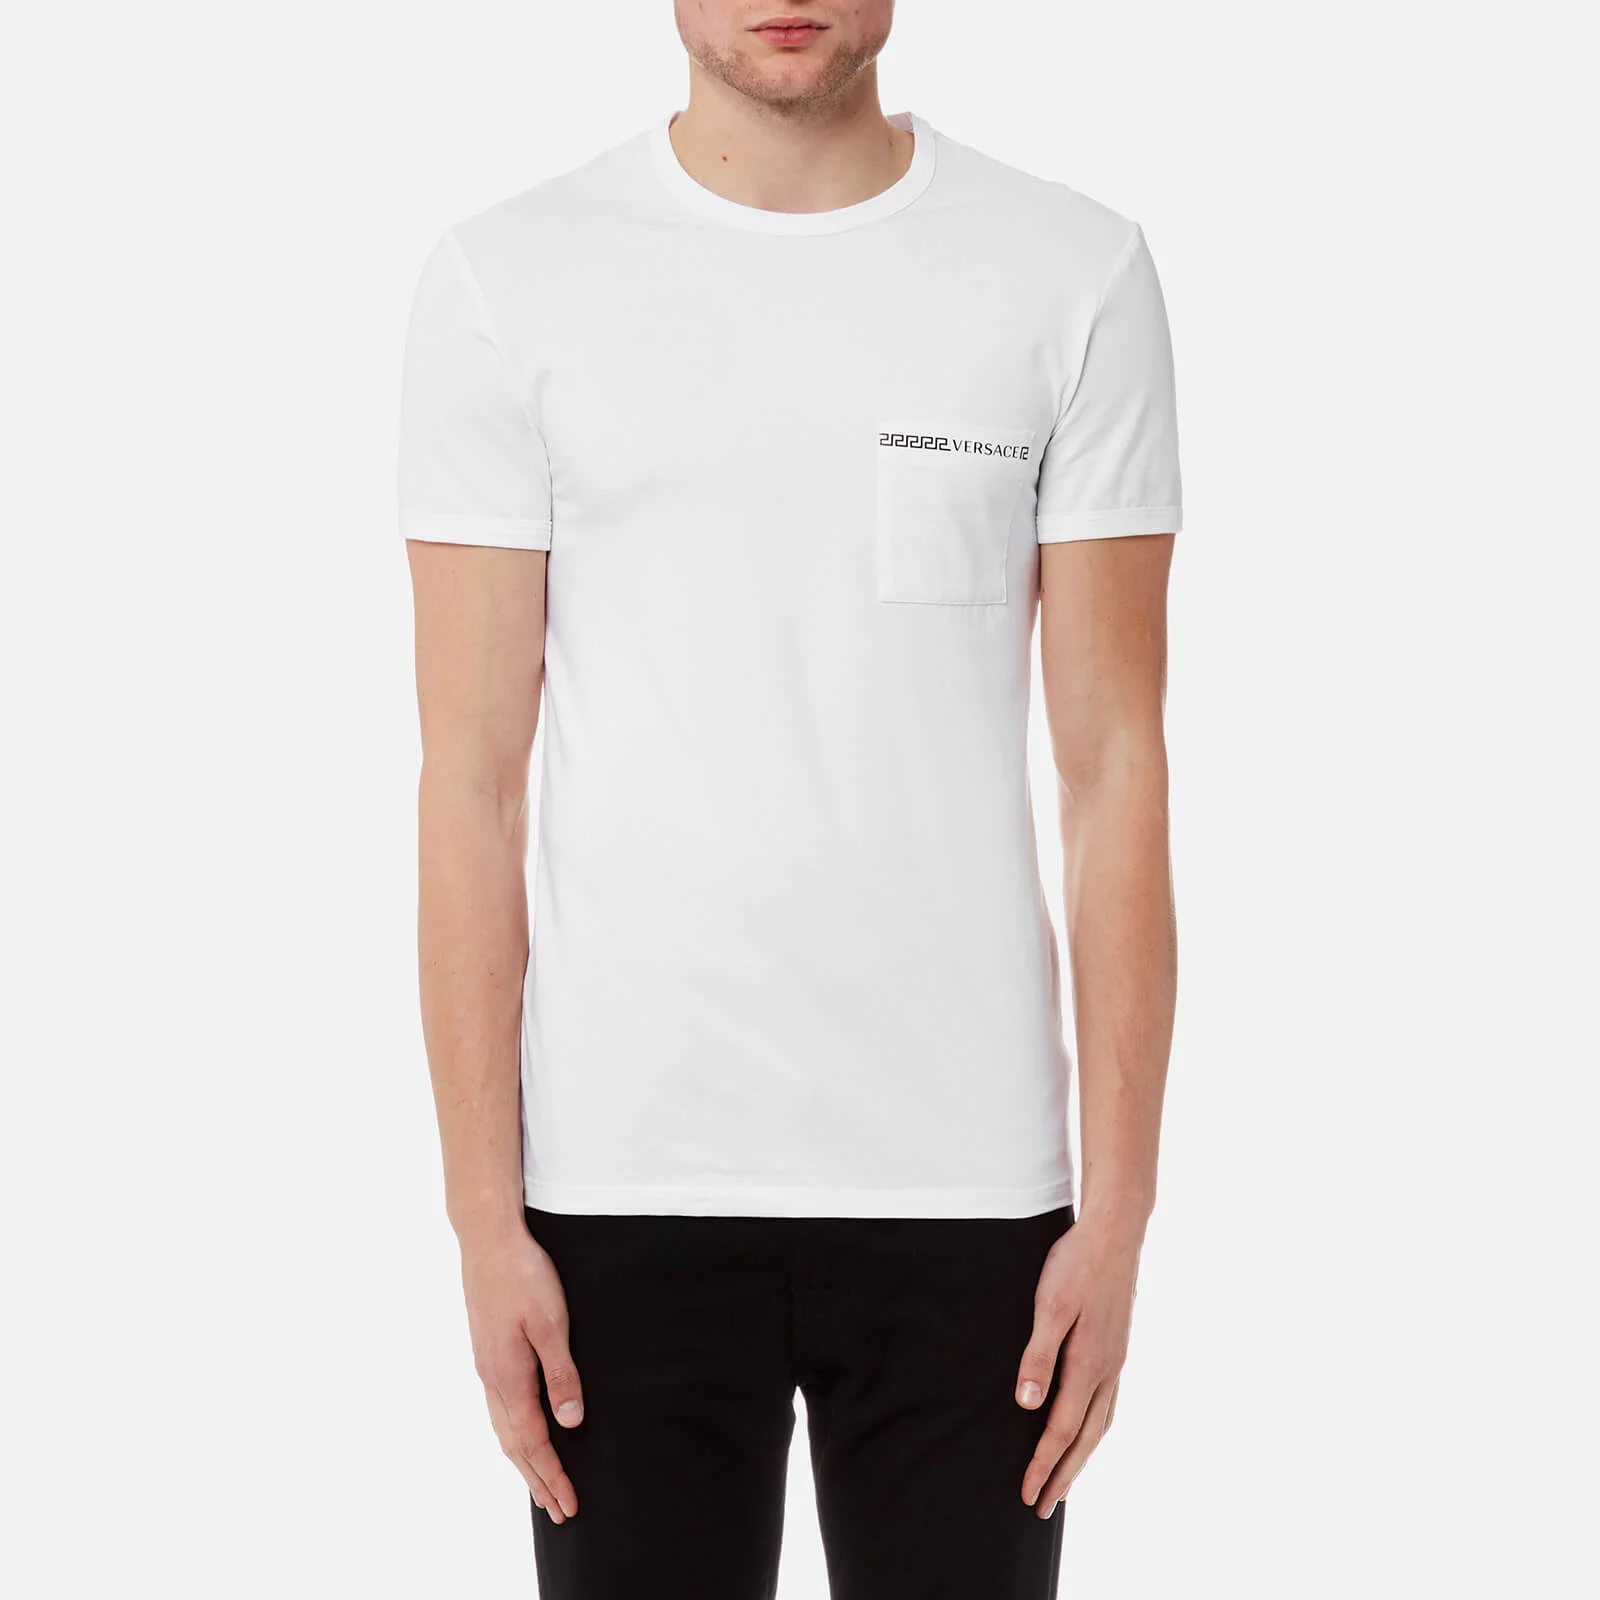 Versus Versace Men's Basic T-Shirt - Bianco Con Scritta Image 1